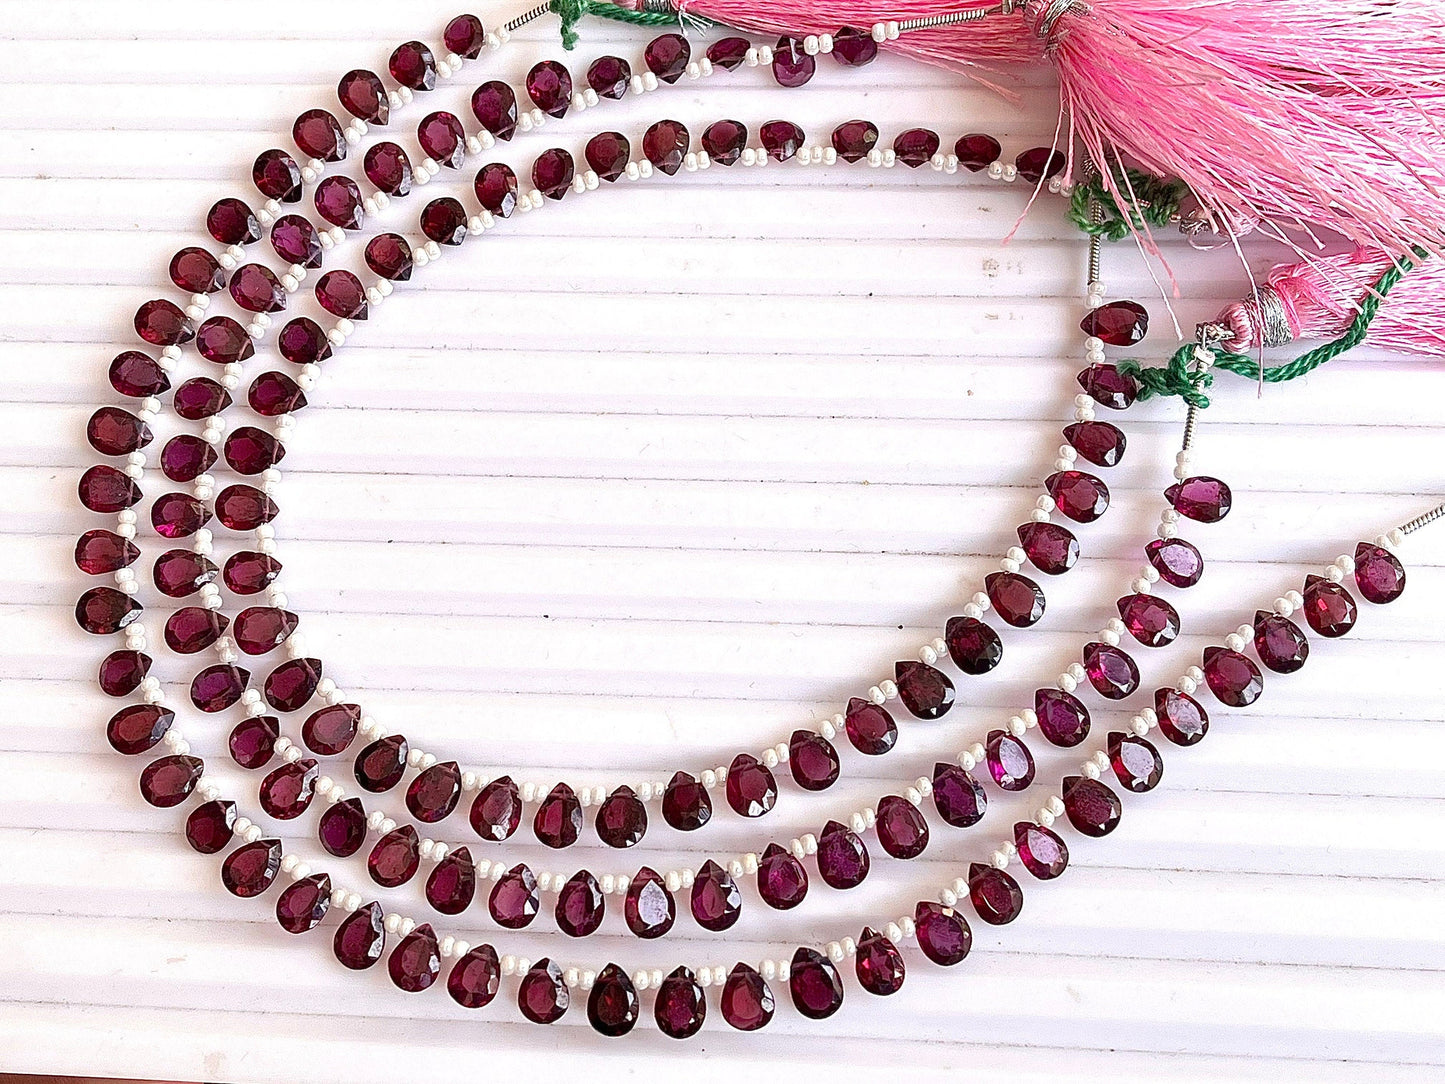 35 Pieces Rhodolite Garnet Pear Shape Cut stone Beads Beadsforyourjewelry